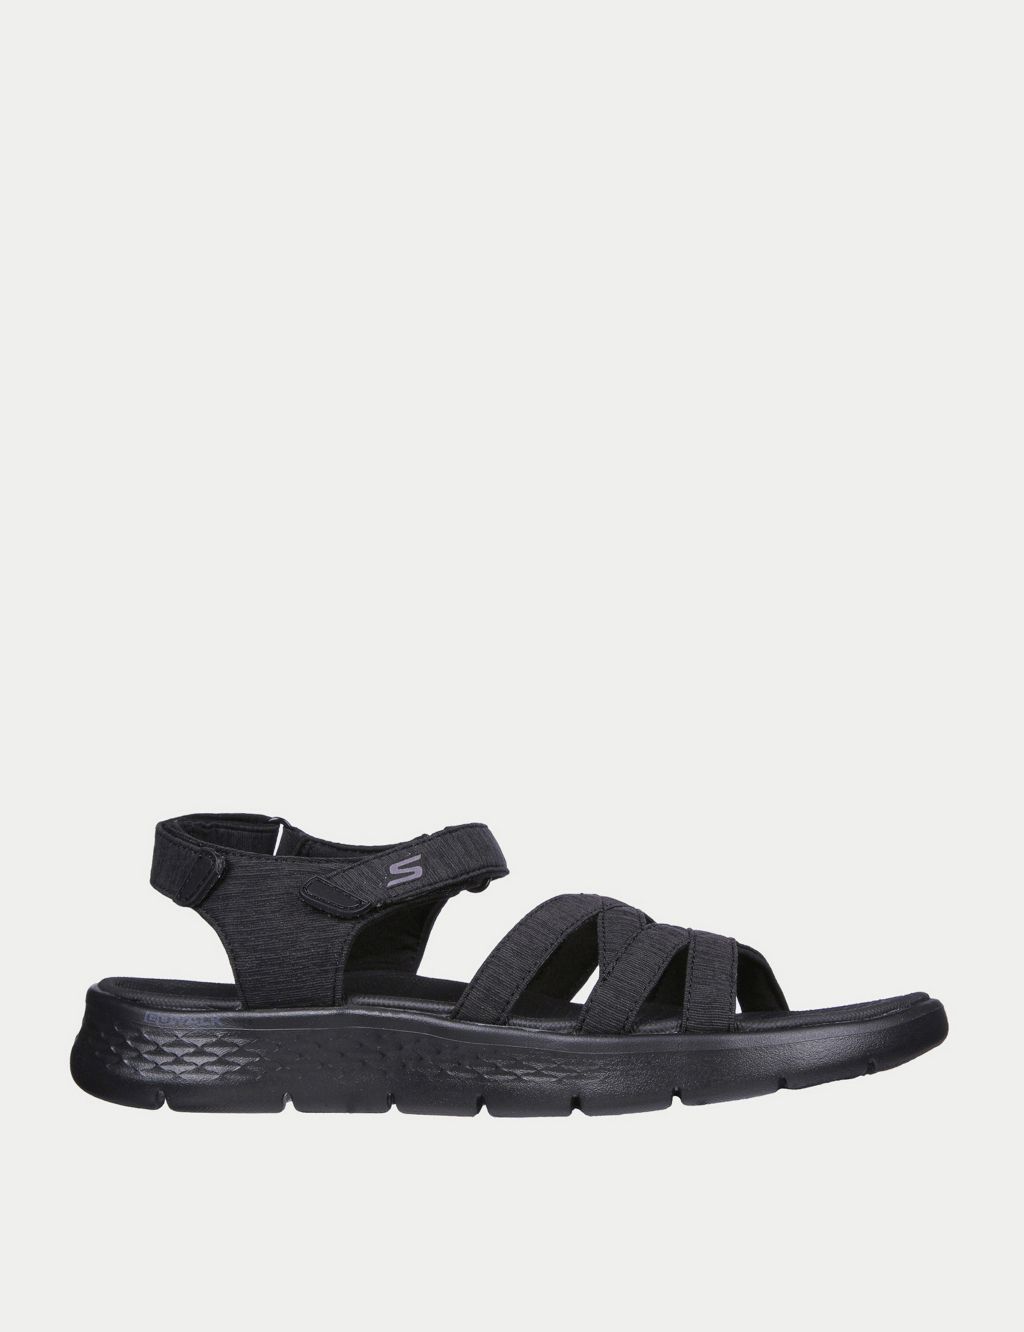 GOwalk Flex Sunshine Sandals